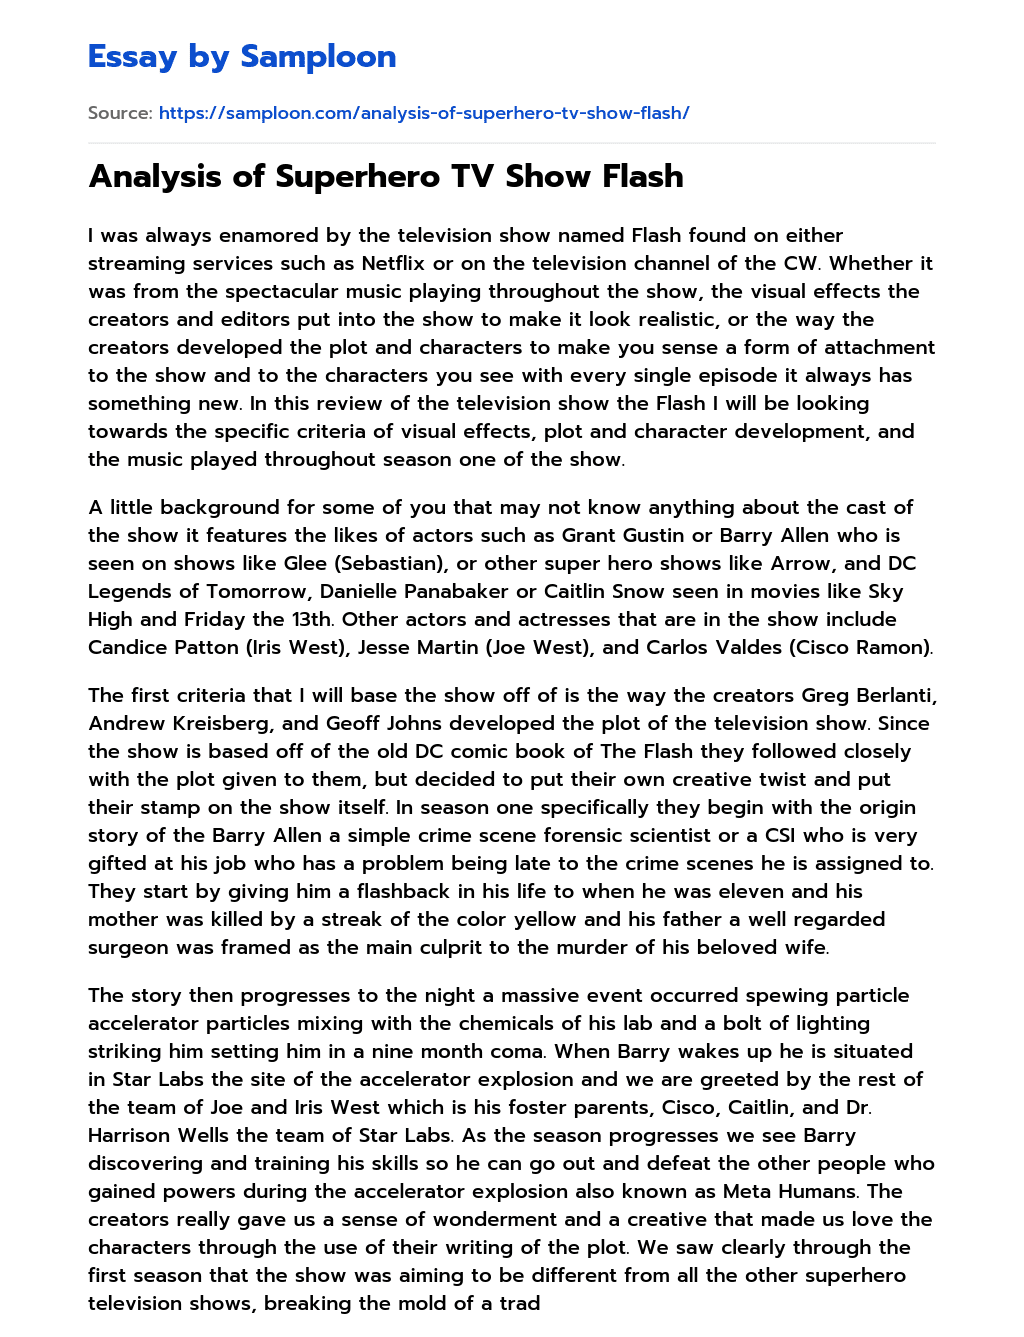 Analysis of Superhero TV Show Flash essay